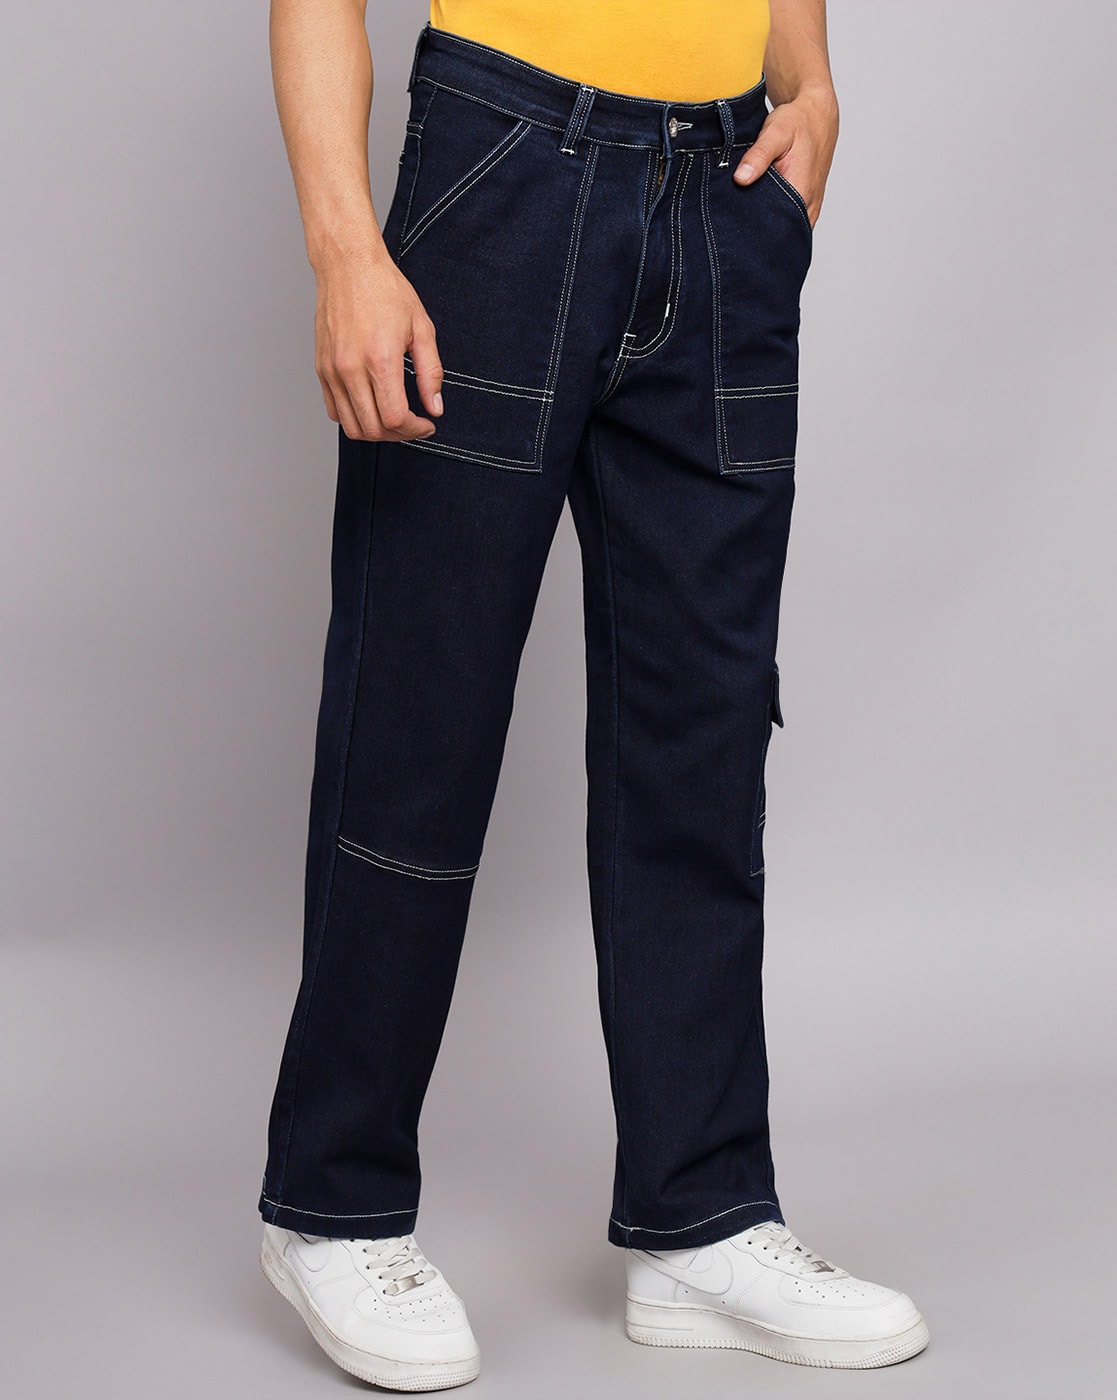 Sk8 Carpenter Color Jeans